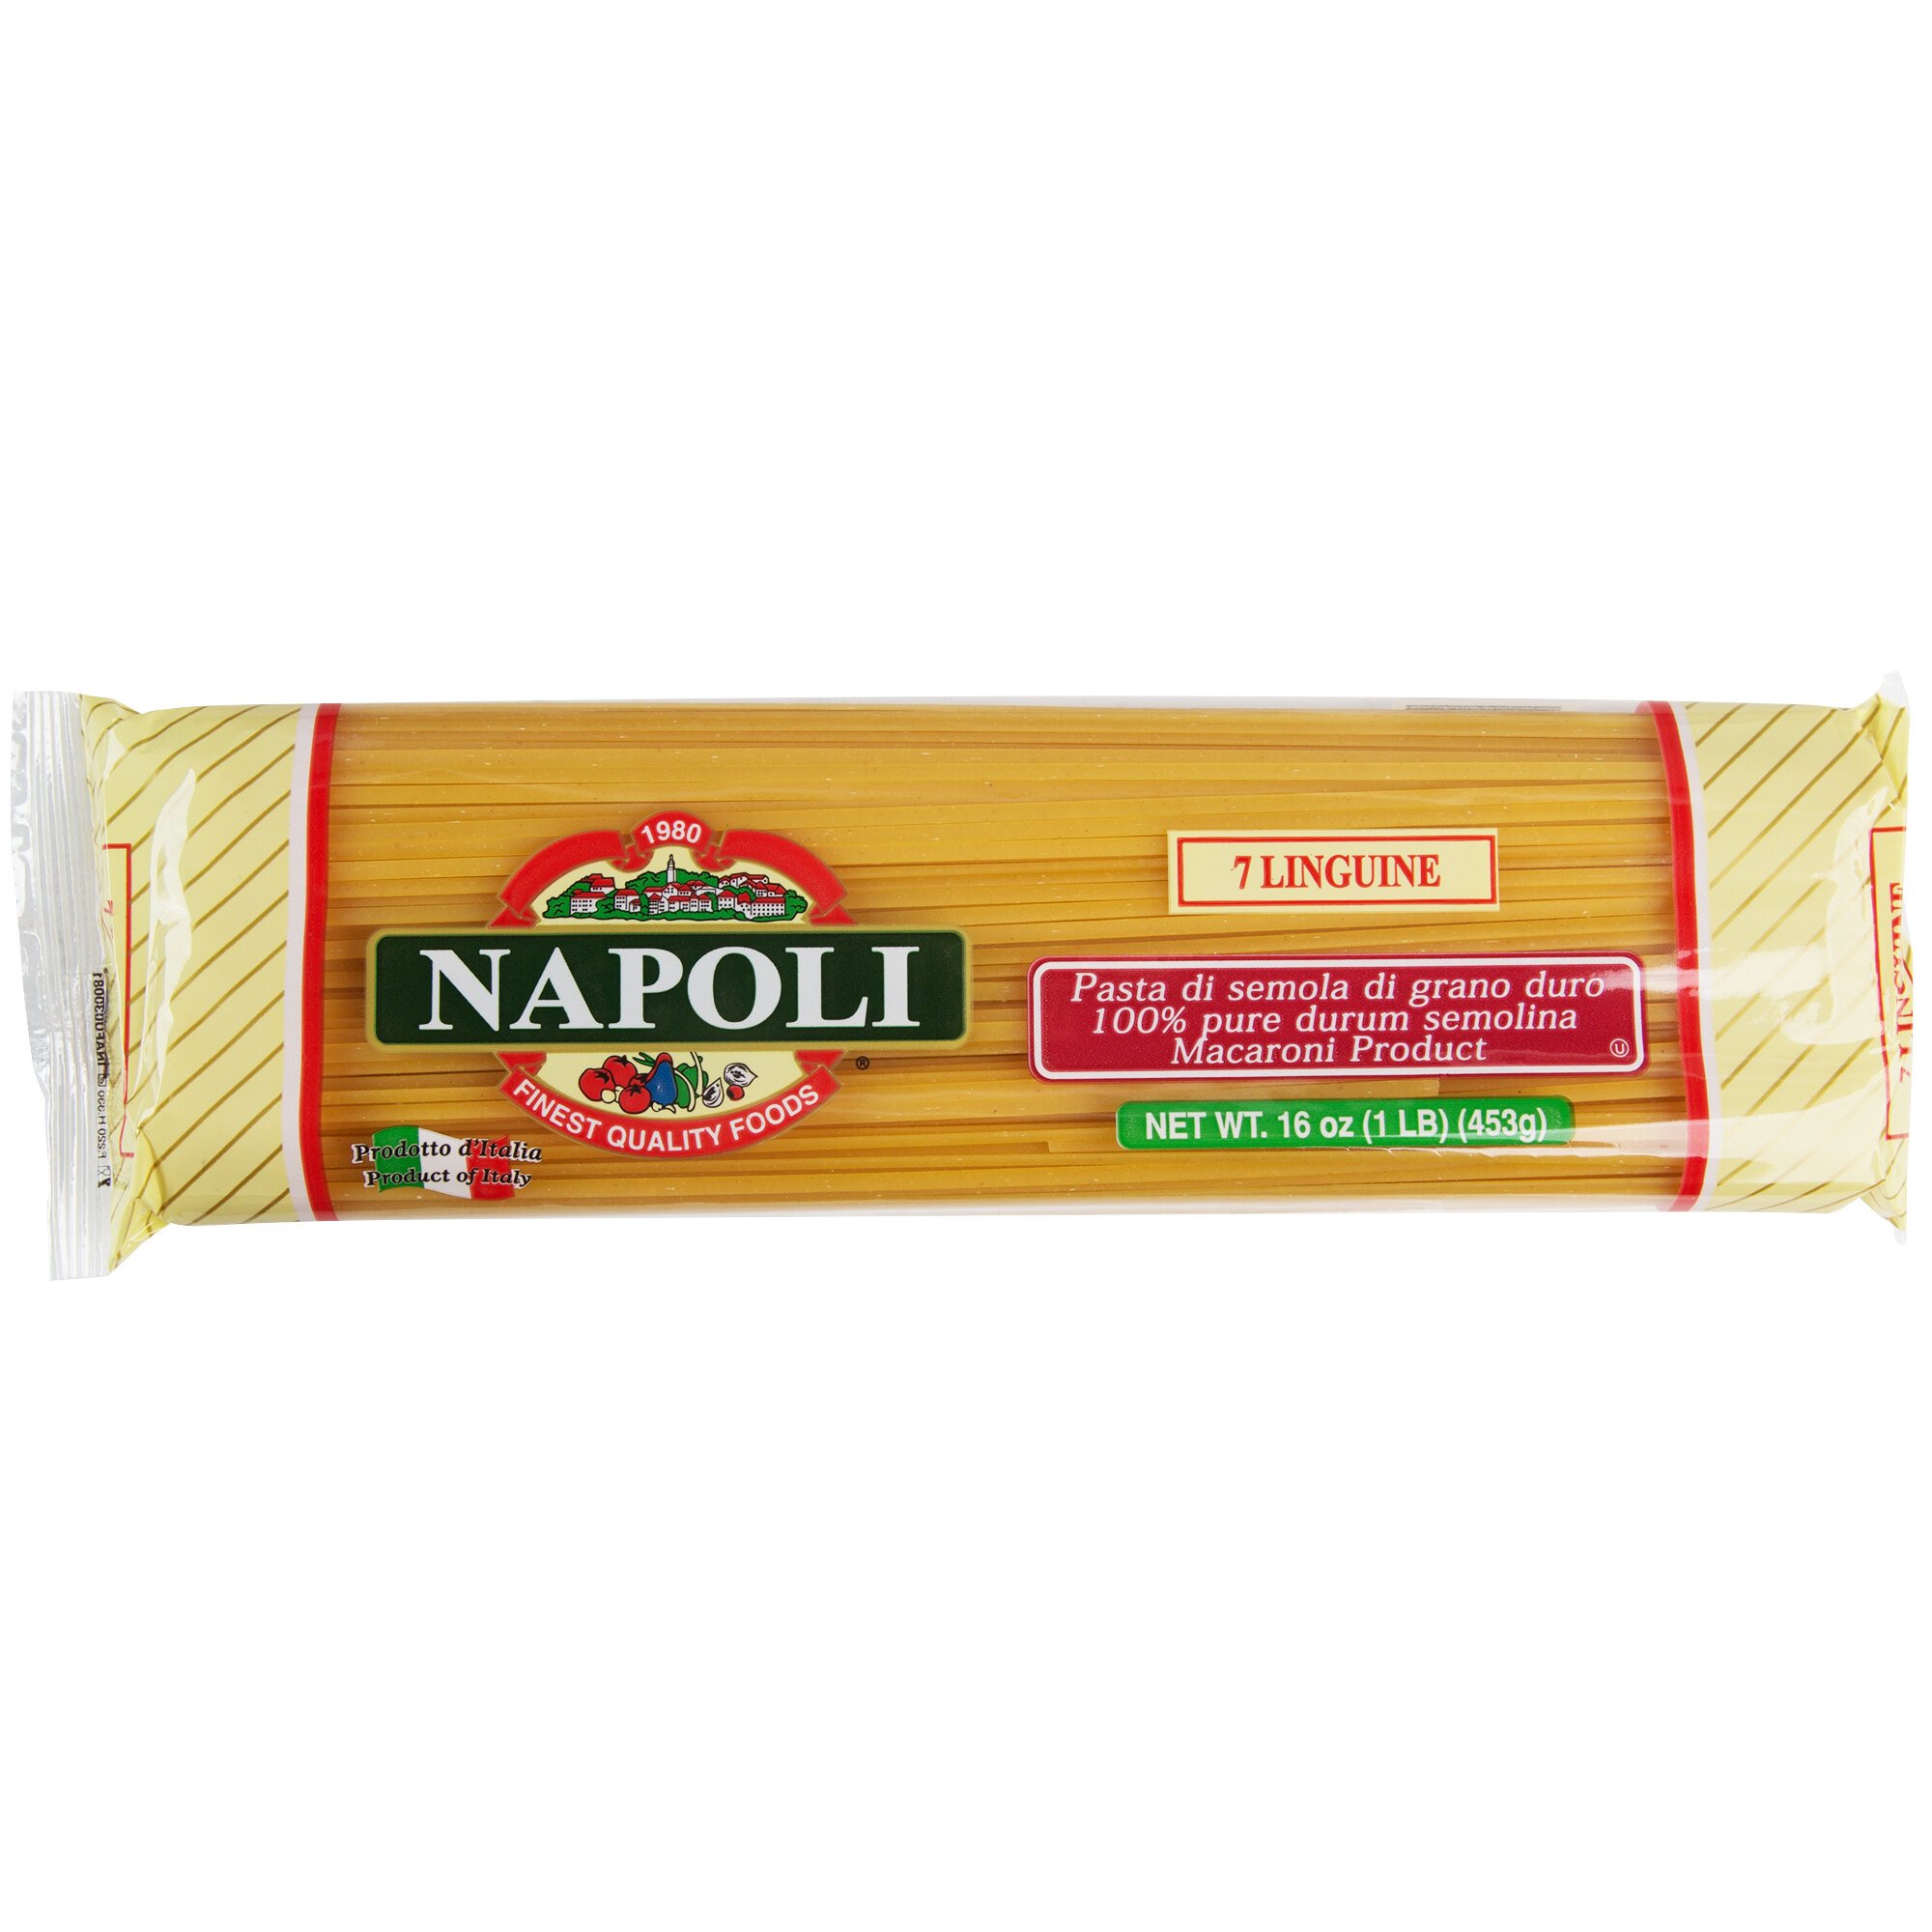 Napoli 1 lb. Linguine Pasta